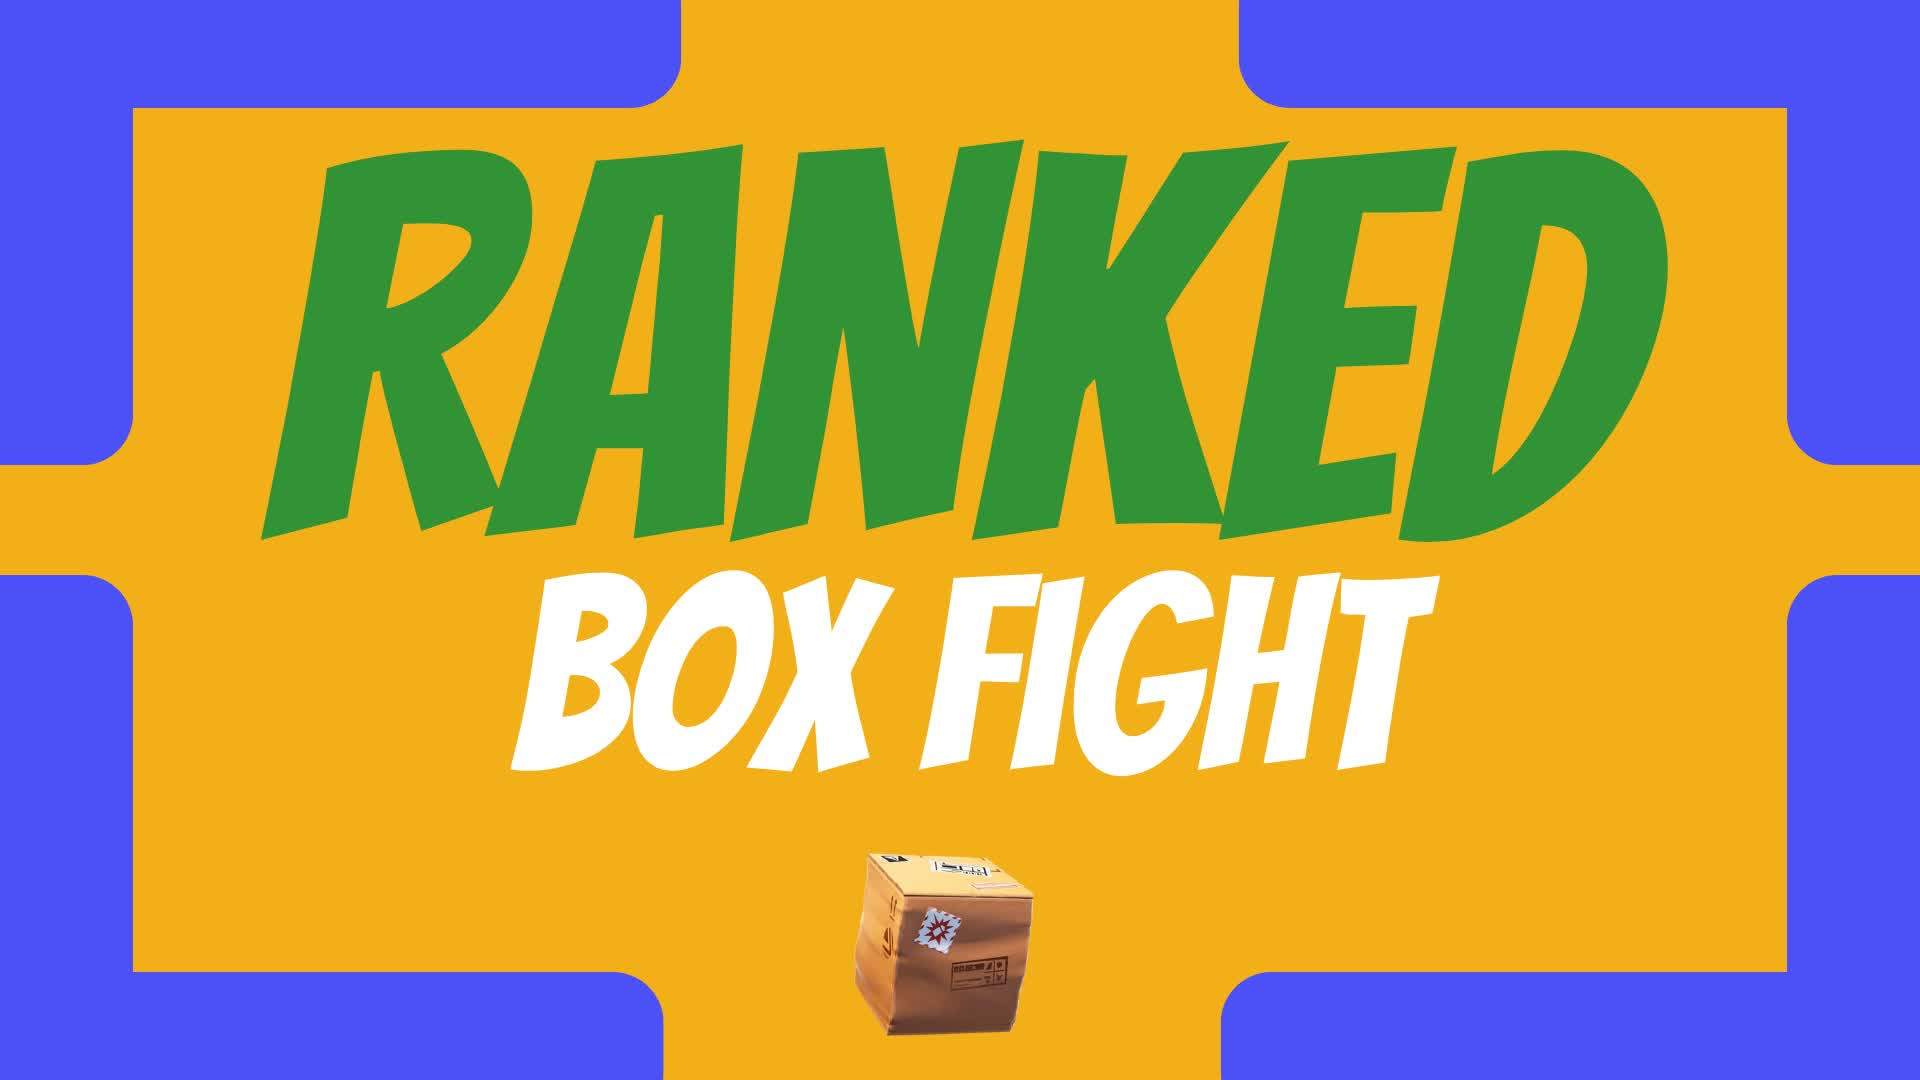 Ranked 1V1 Box Fight